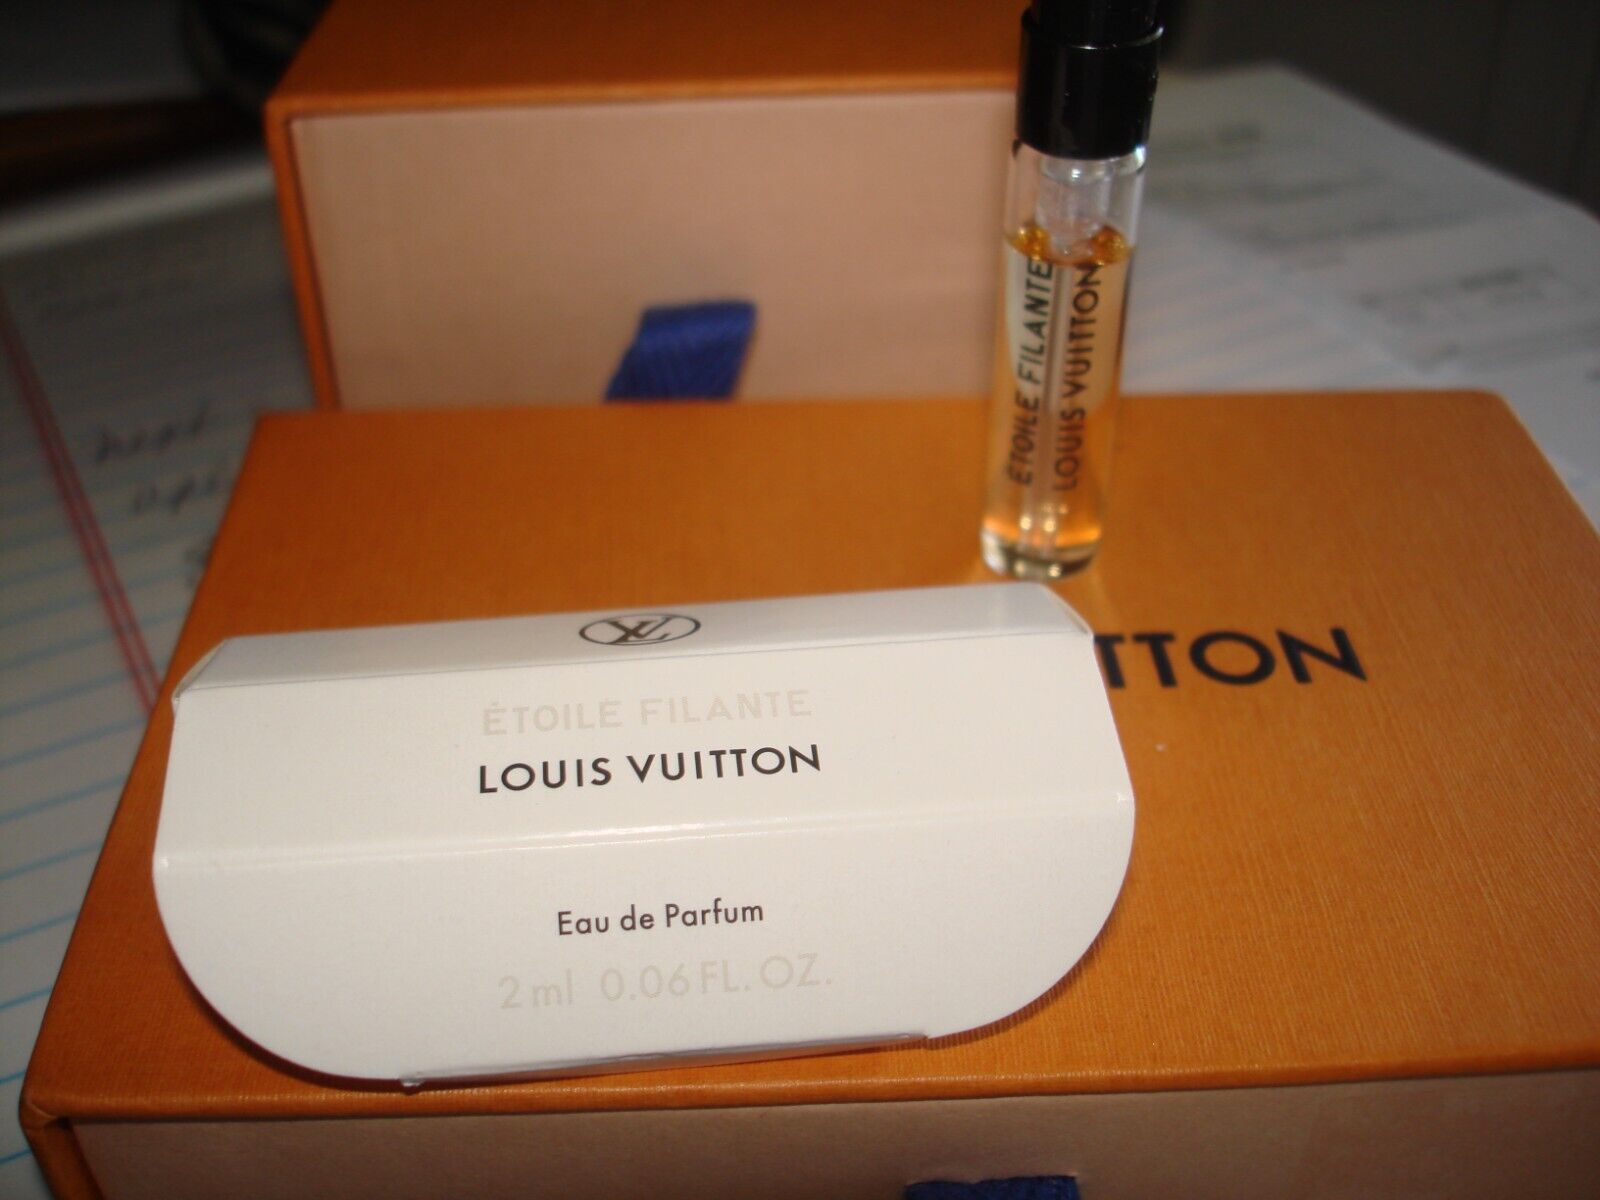 100% Authentic Louis vuitton perfume samples etoile filante 2ML With Box.